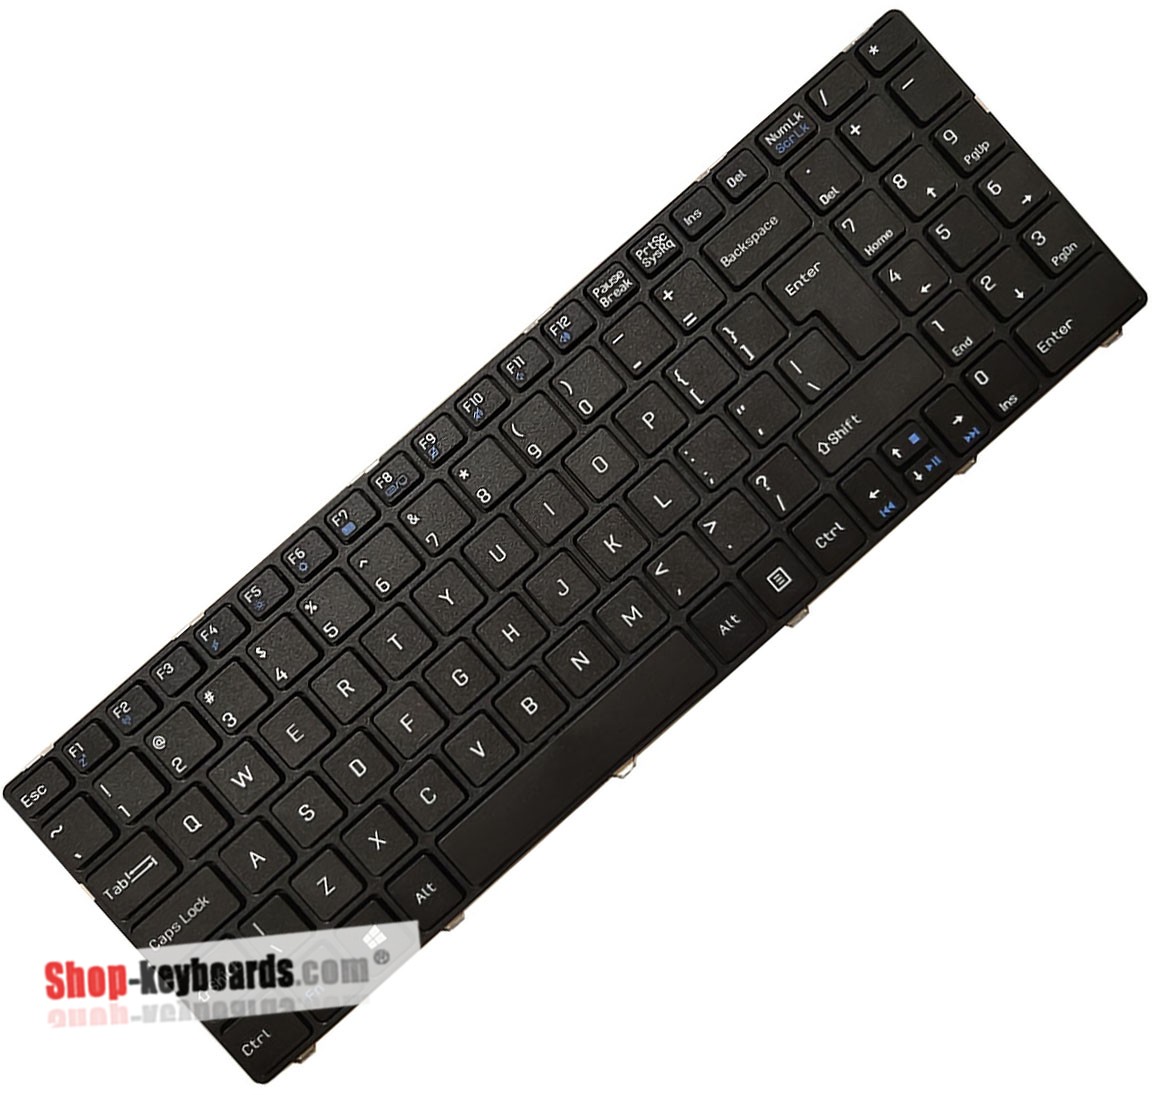 MSI CX640-035US Keyboard replacement